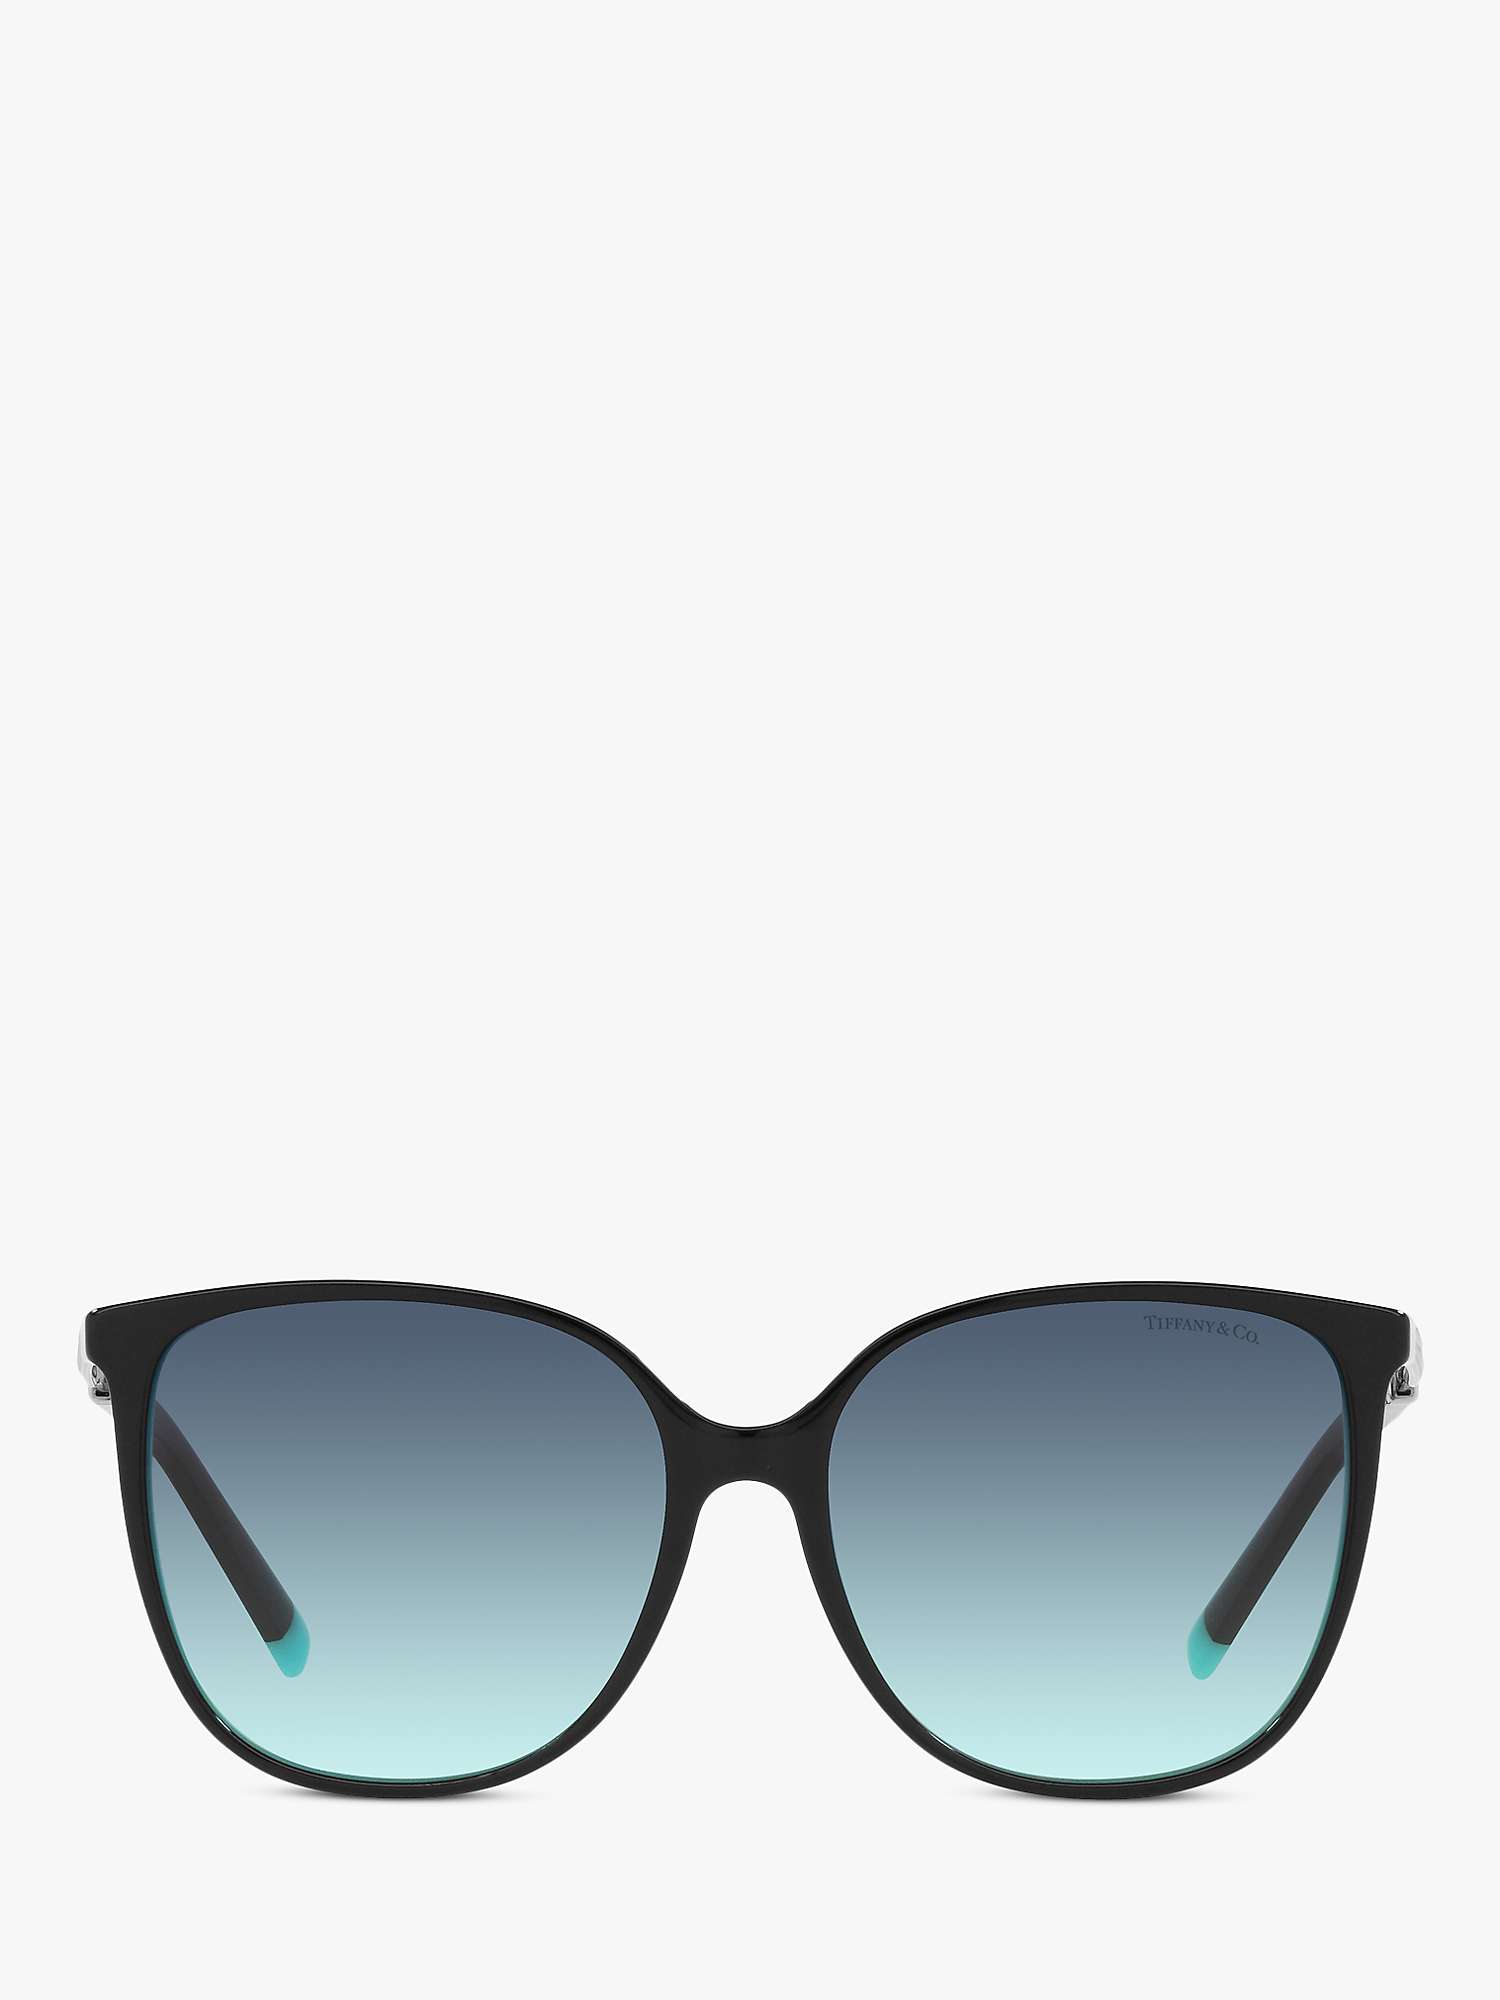 Buy Tiffany & Co TF4184 Women's Oval Sunglasses, Black/Blue Gradient Online at johnlewis.com